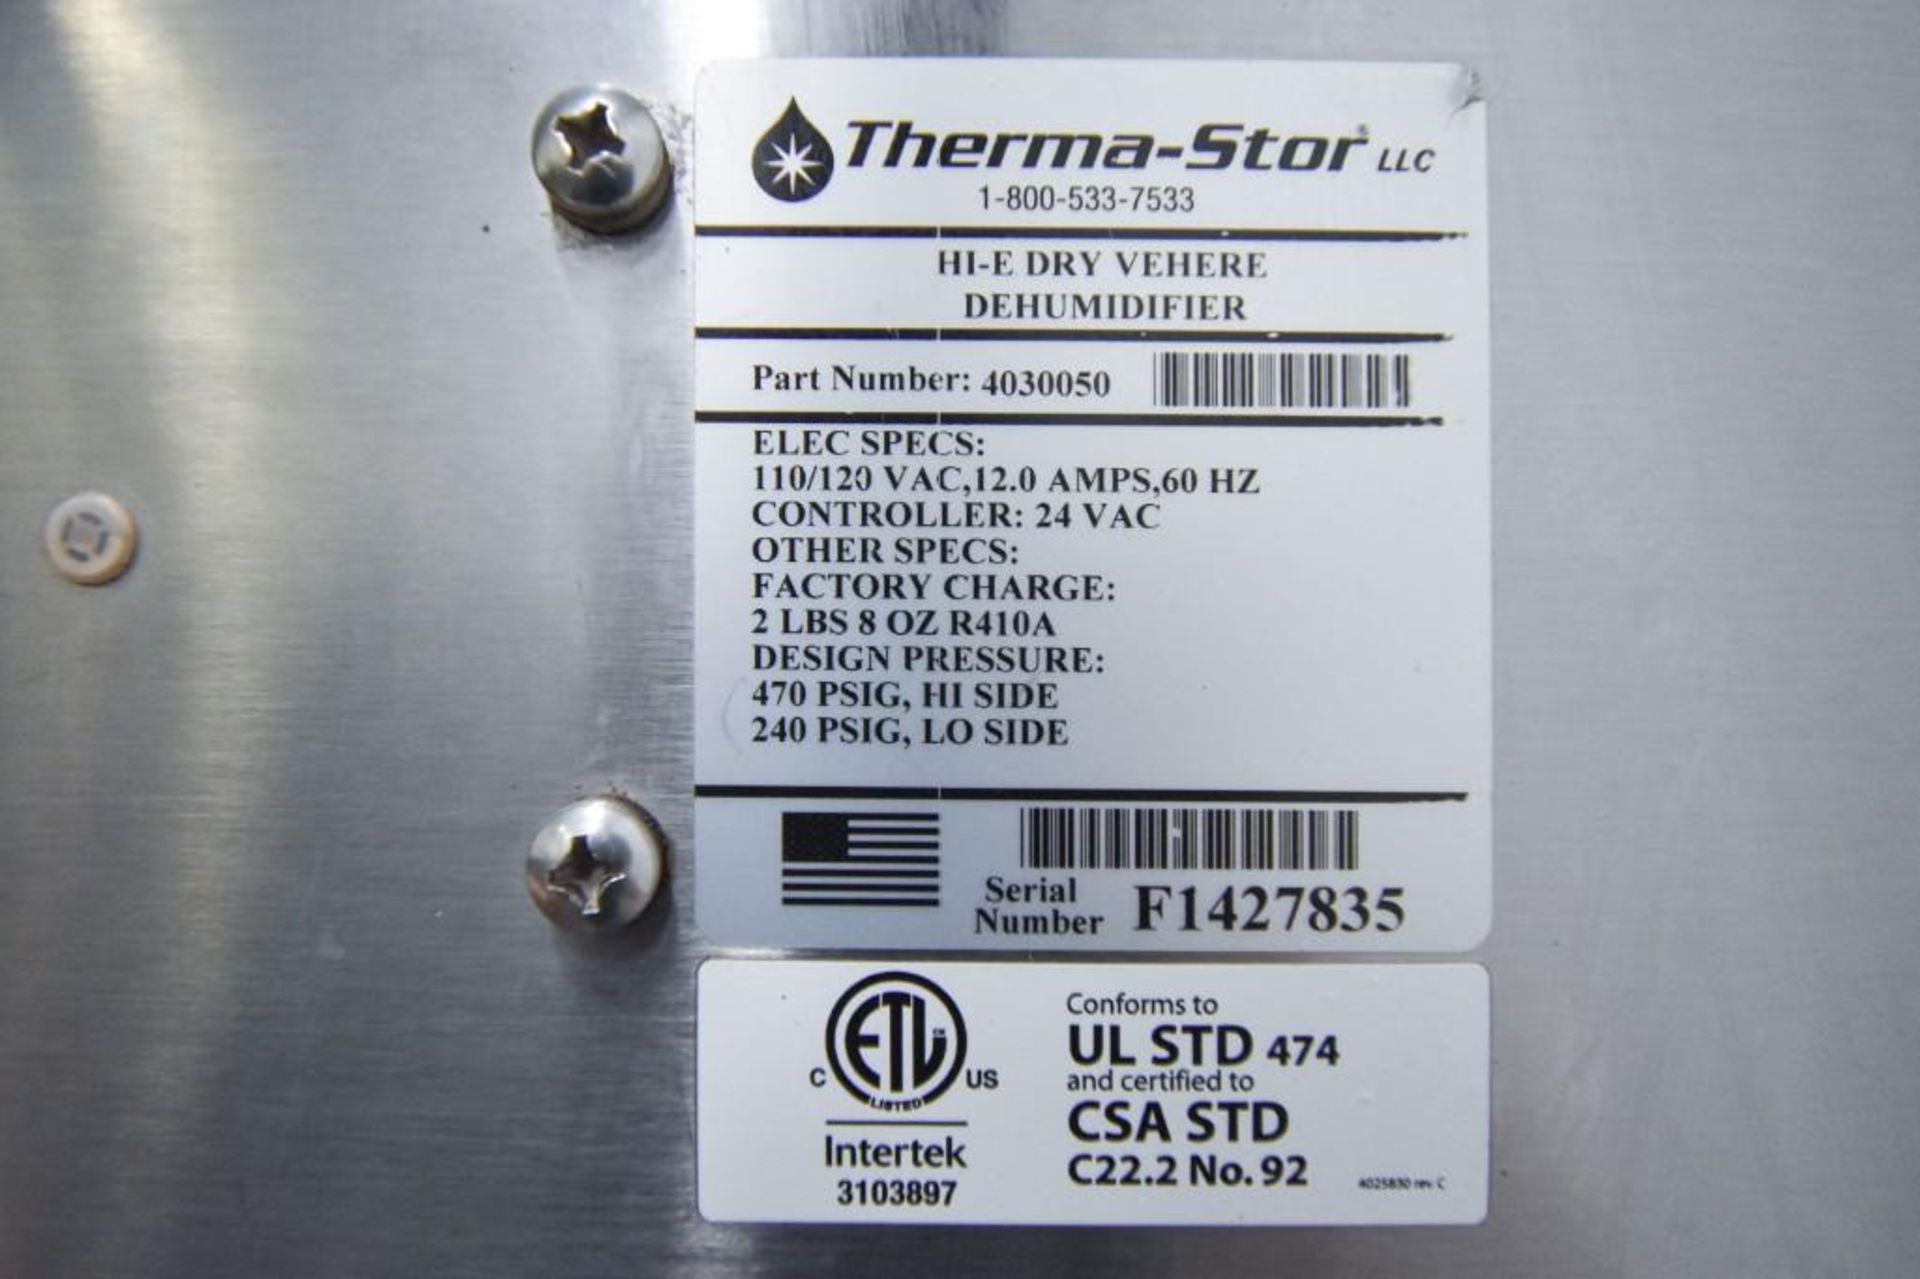 Hi-E Dry Vehere Thermastor - Image 3 of 3